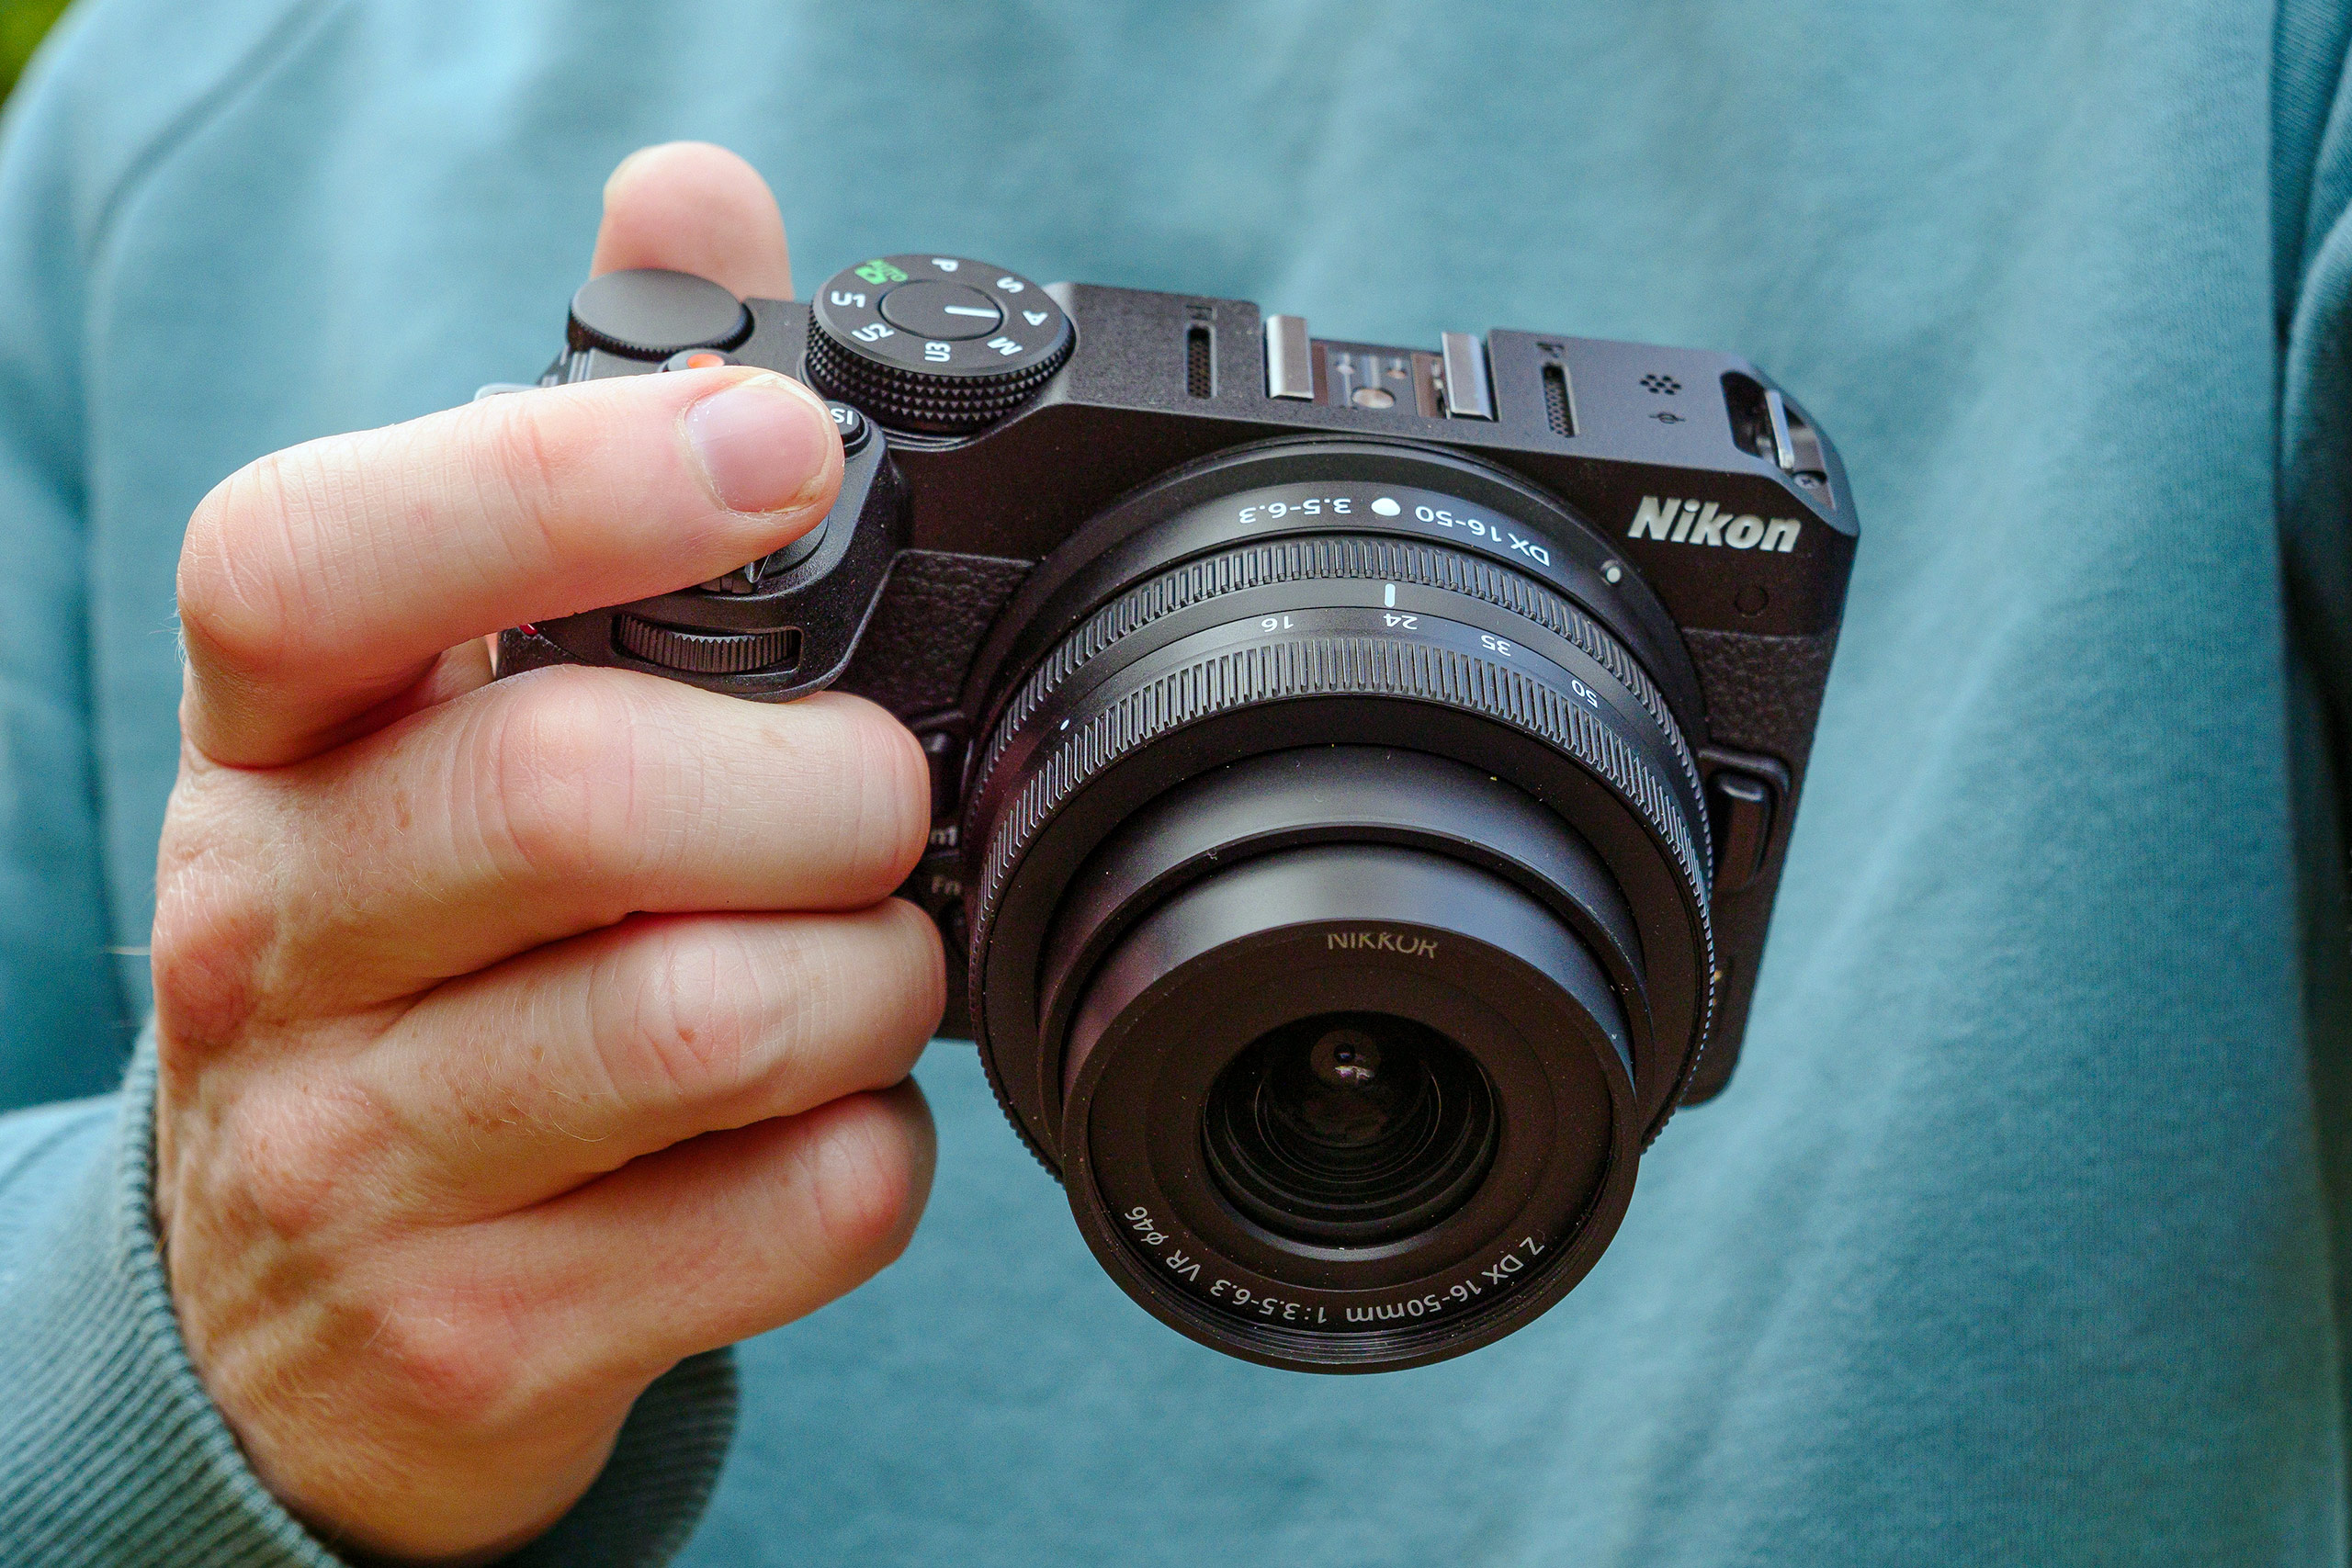 Nikon Z30 in hand, image: Tim Coleman